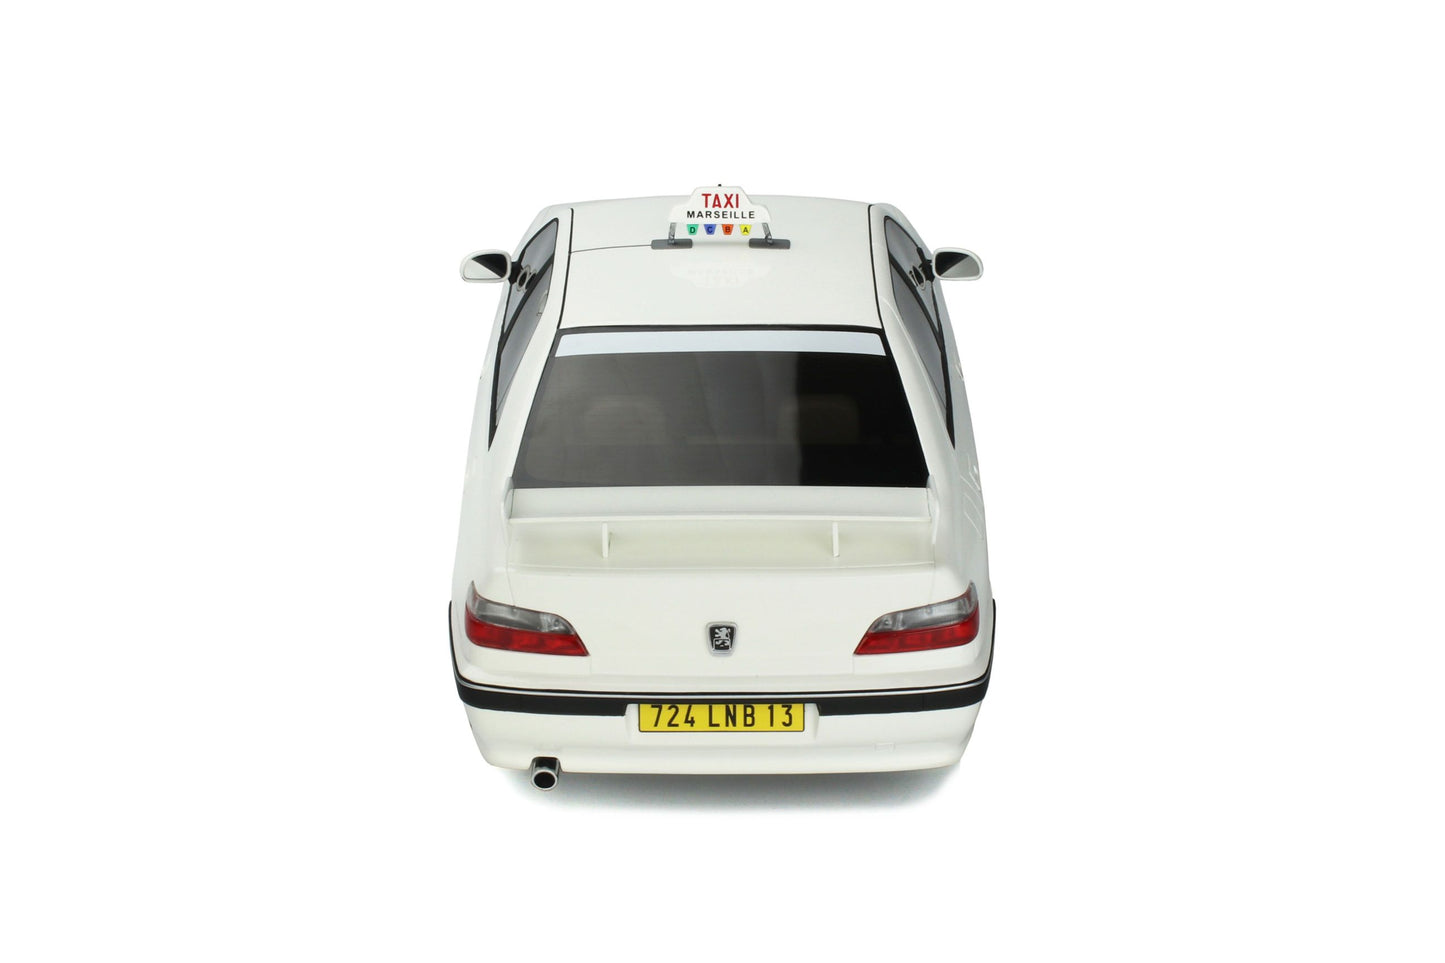 OttOmobile - Peugeot 406 "Taxi" (White) 1:12 Scale Model Car